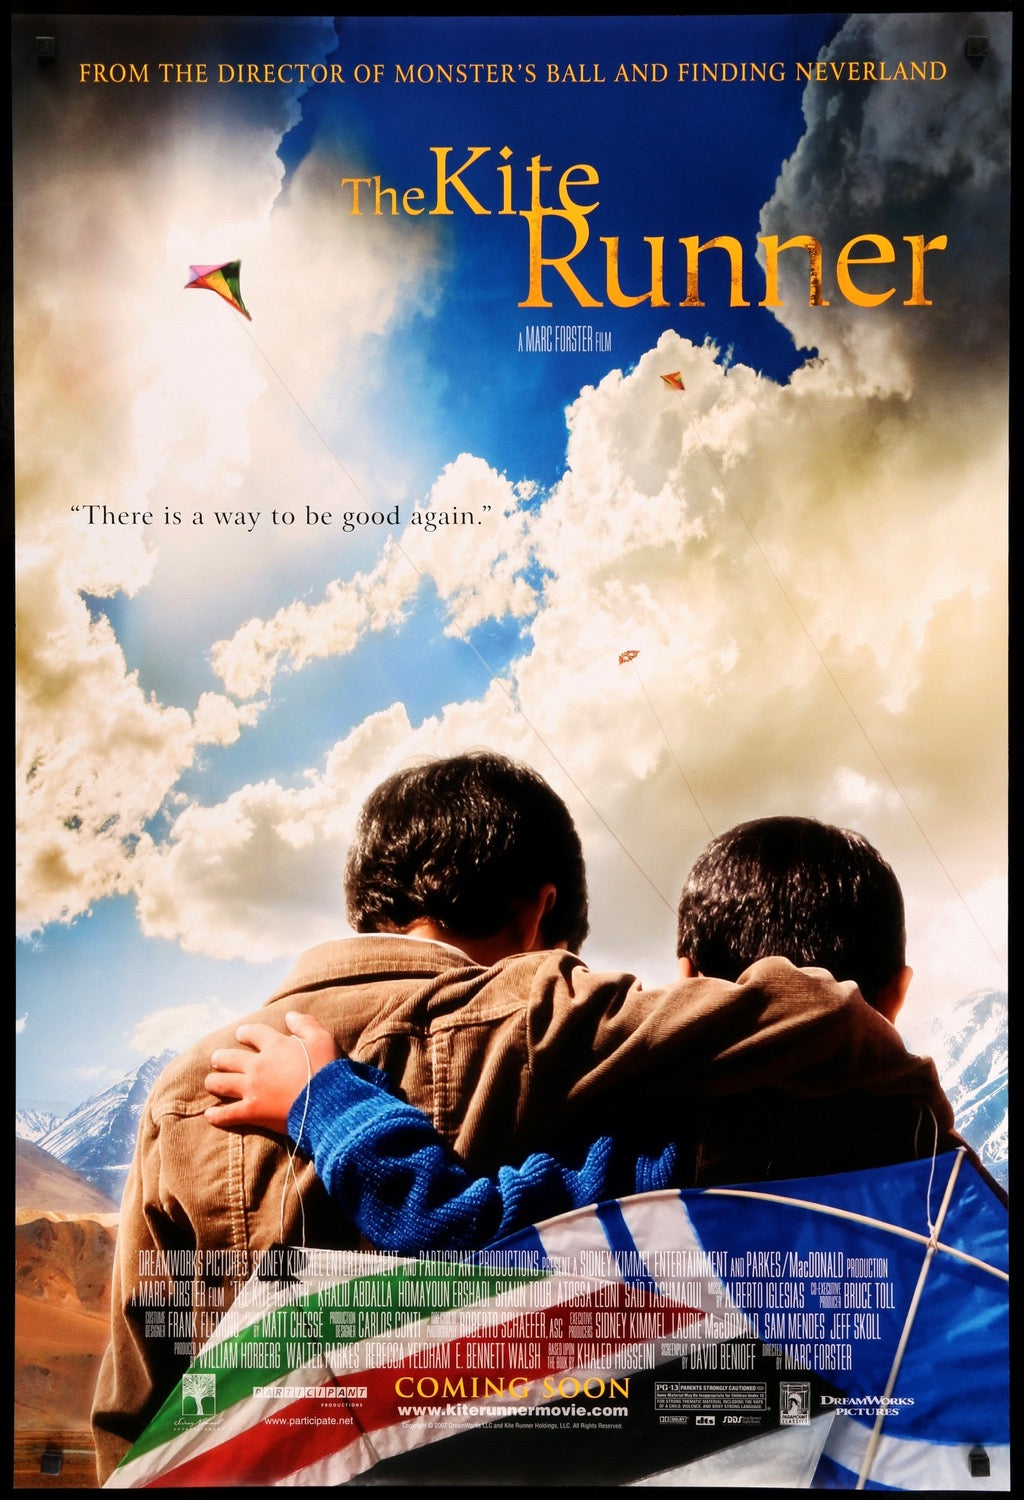 Kite Runner (2007) original movie poster for sale at Original Film Art